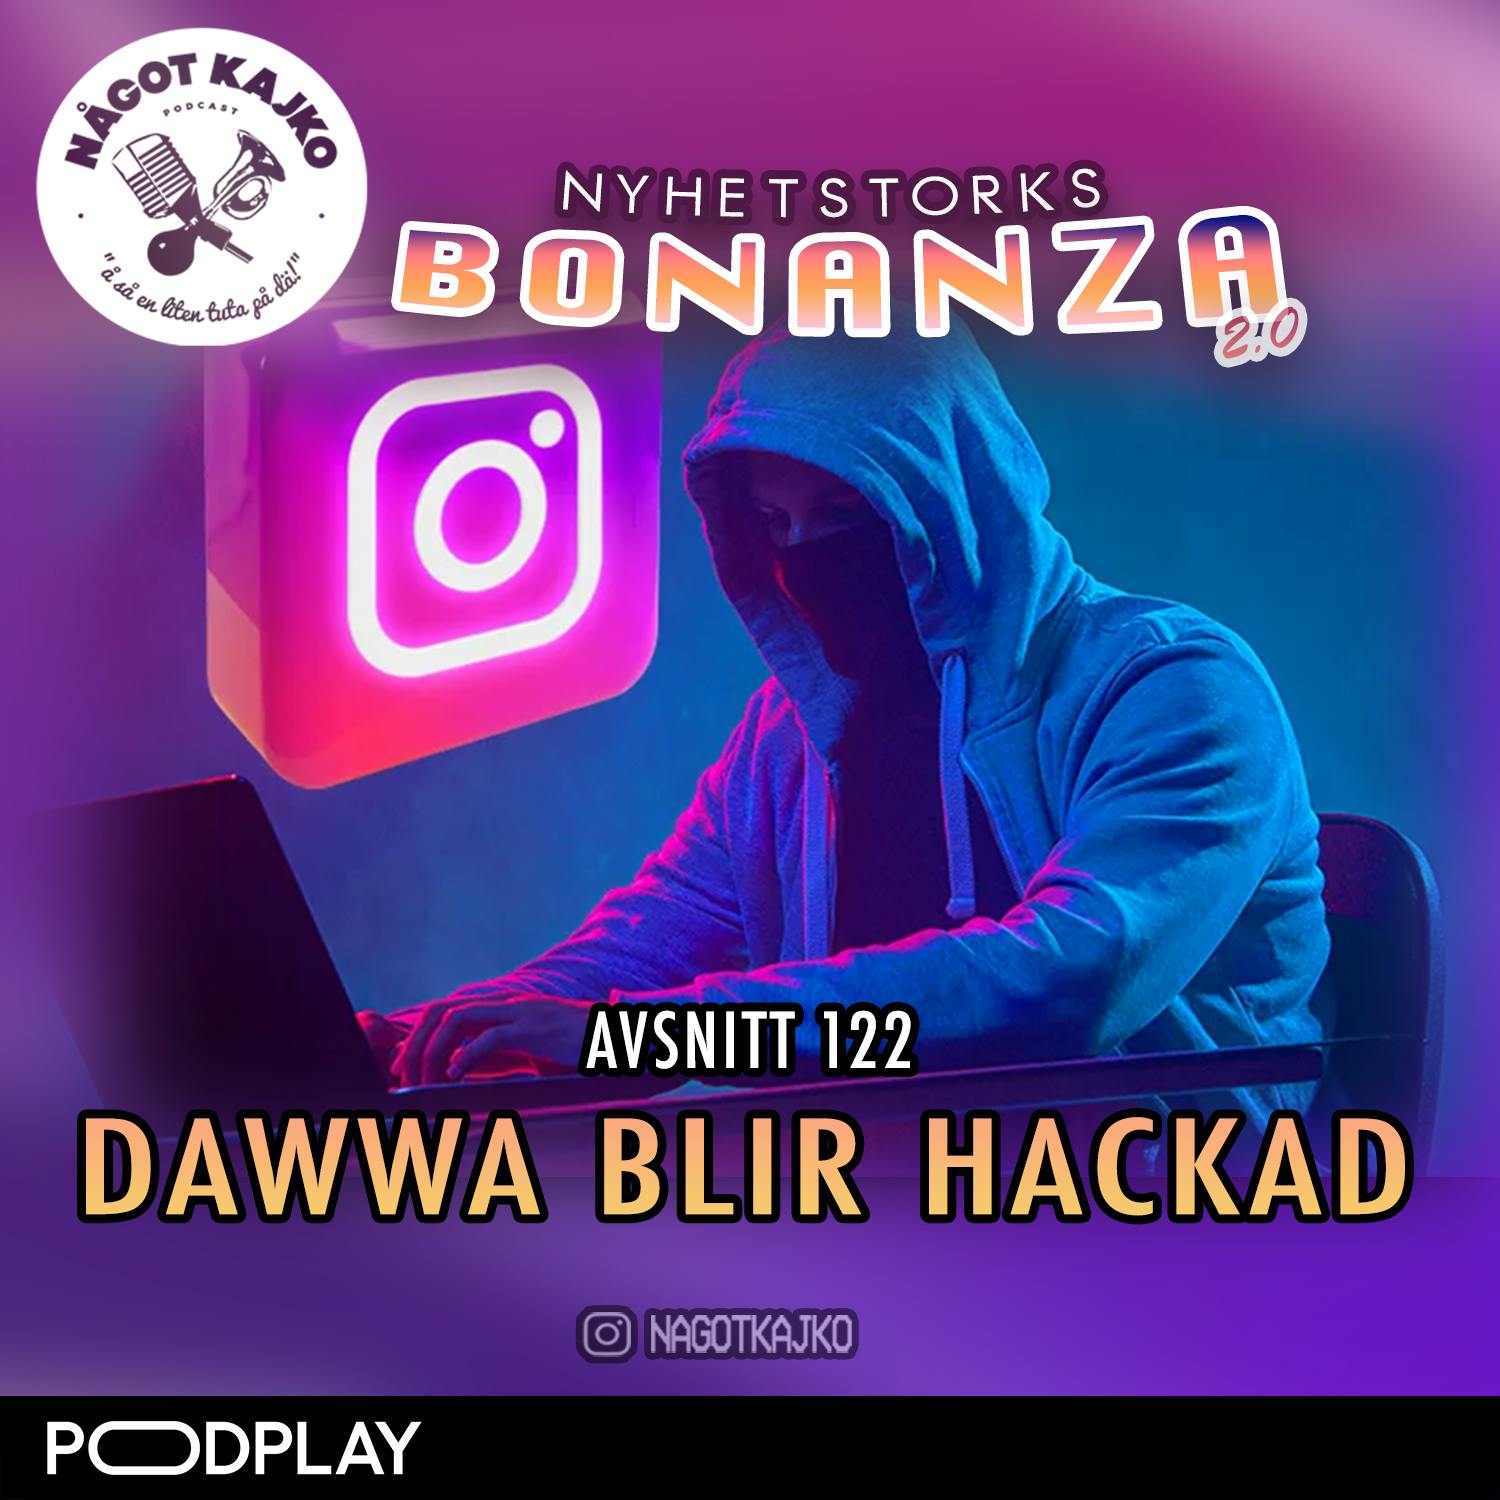 122. Dawwa blir hackad - Nyhetstorksbonanza 2.0